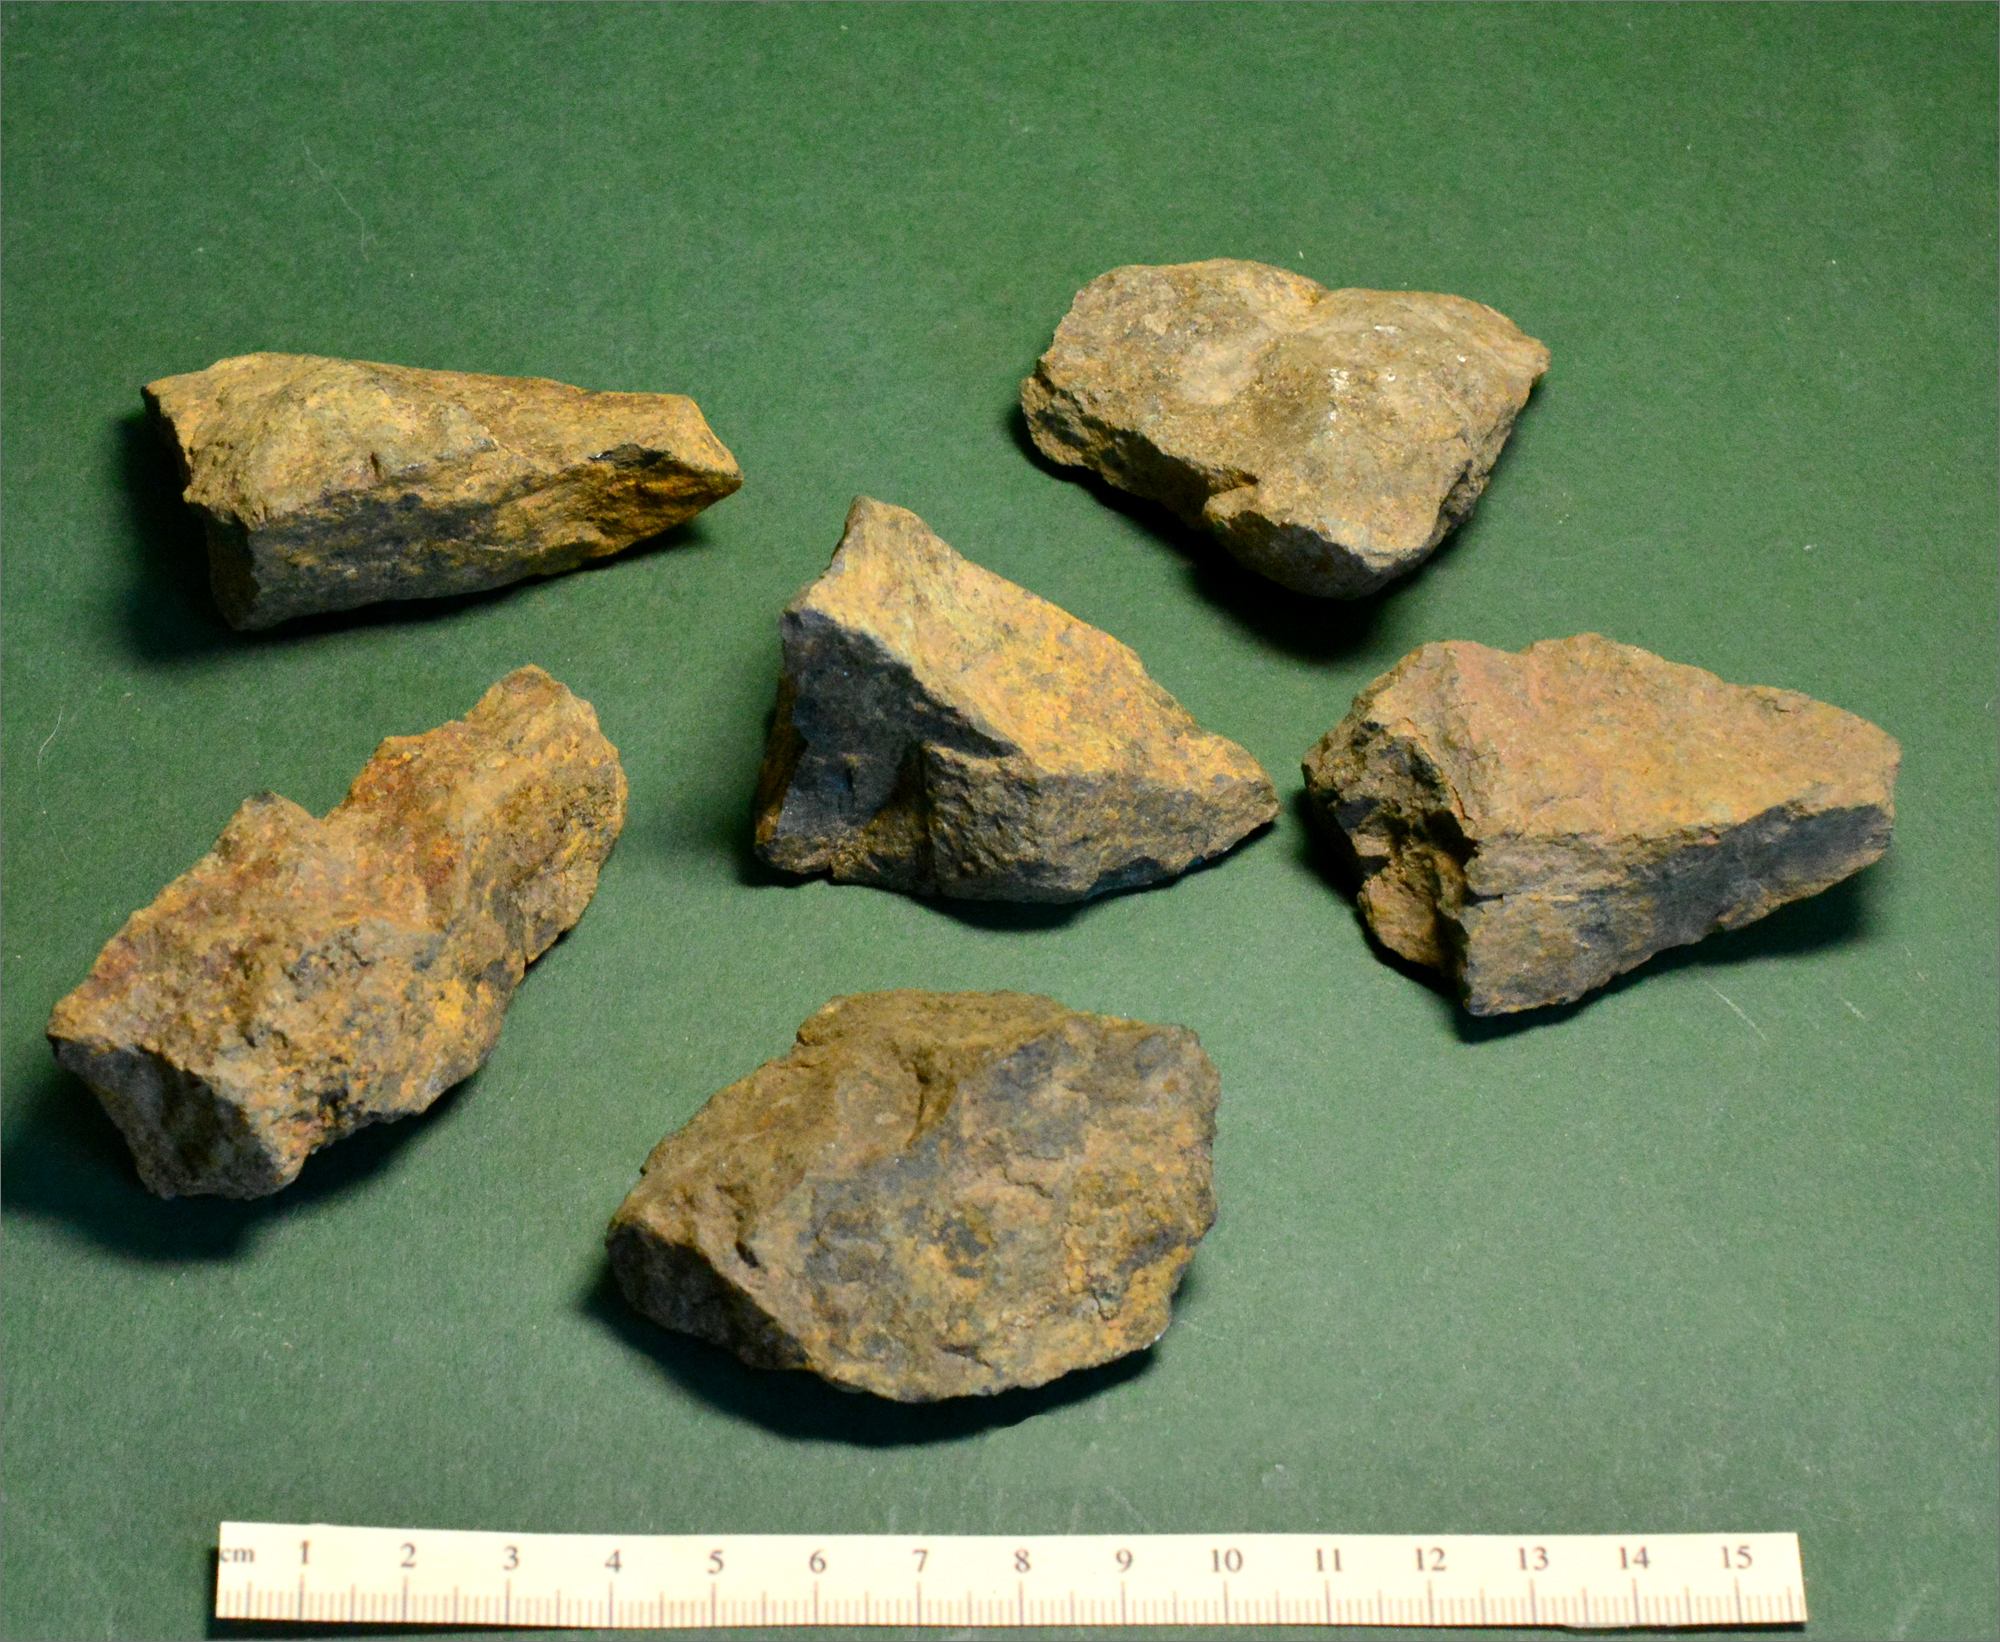 North West Africa Meteorite offer. 4 billion years old.